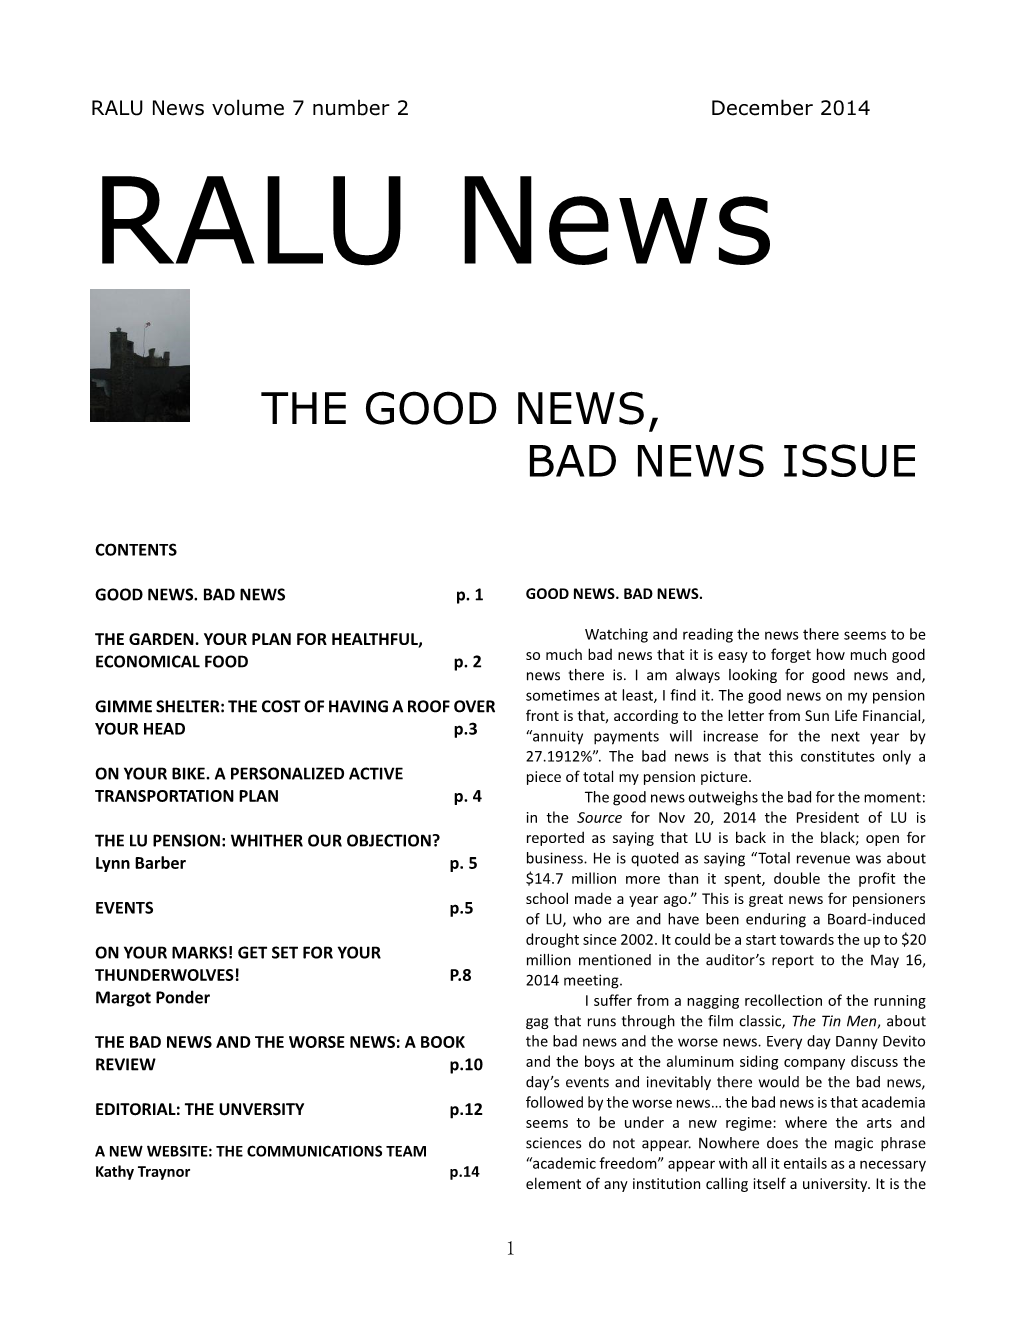 RALU News Volume 7 Number 2 December 2014